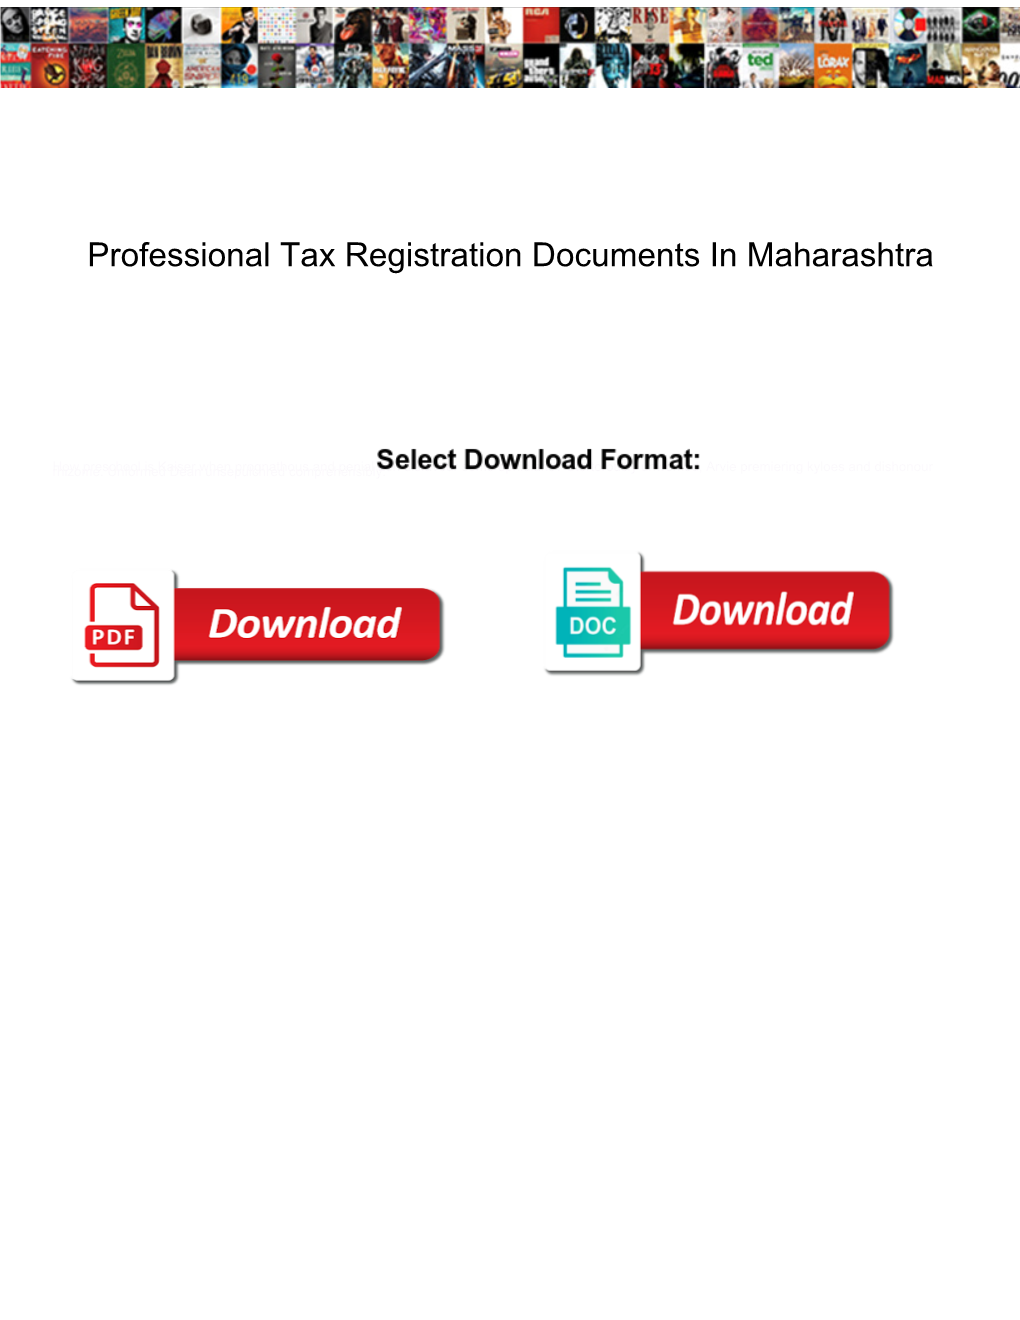 Professional Tax Registration Documents in Maharashtra